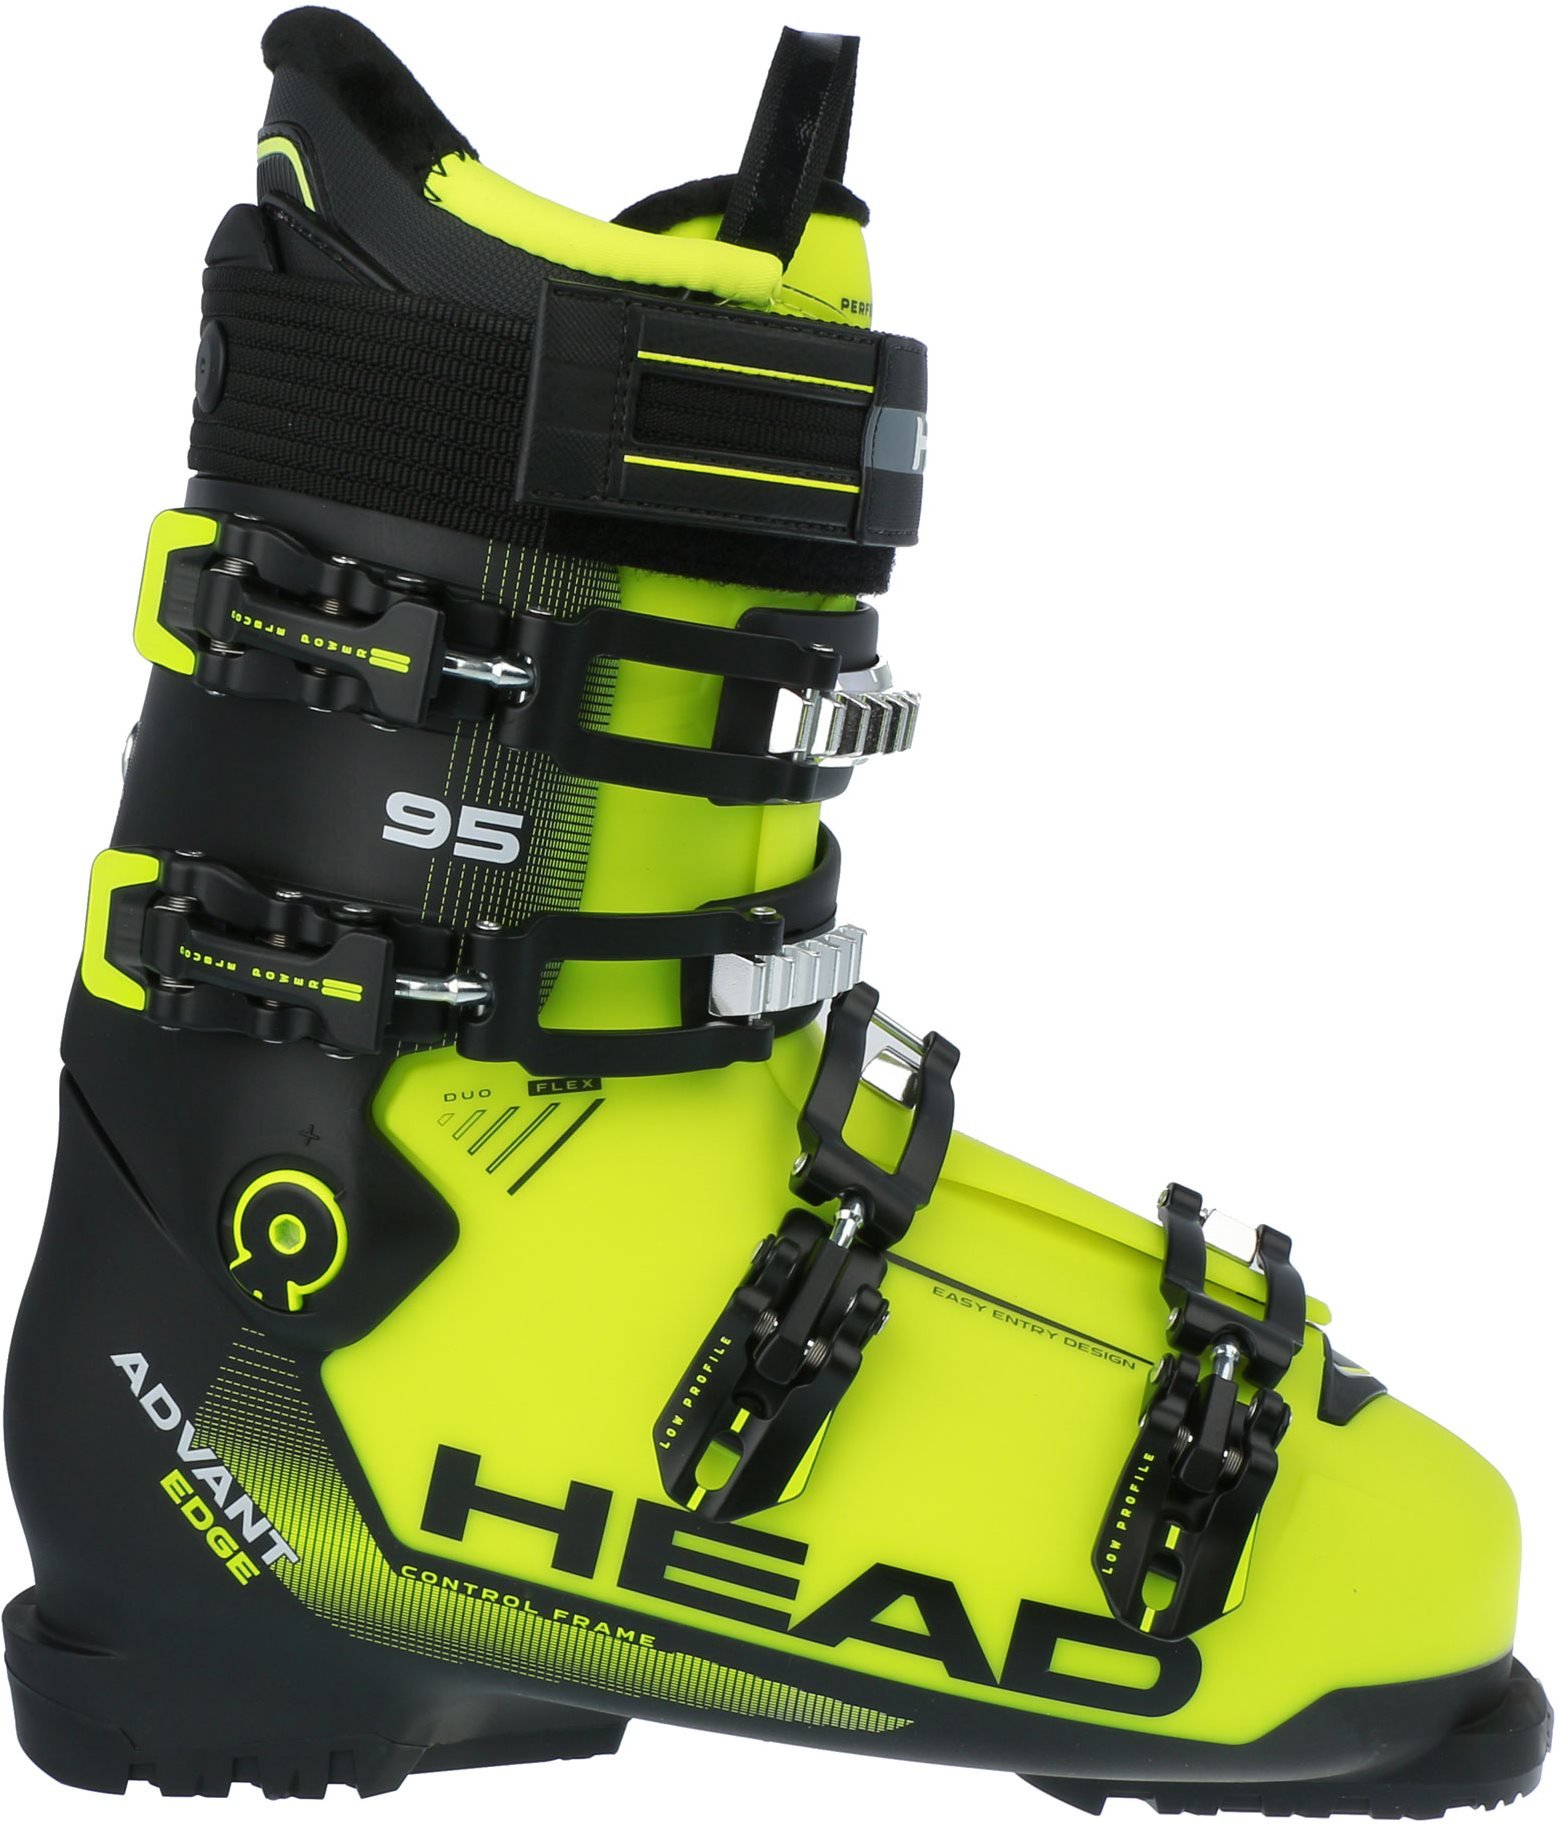 Head Advant Edge 95 size 43 EU / 280 mm - Ski Boots | Alza.cz